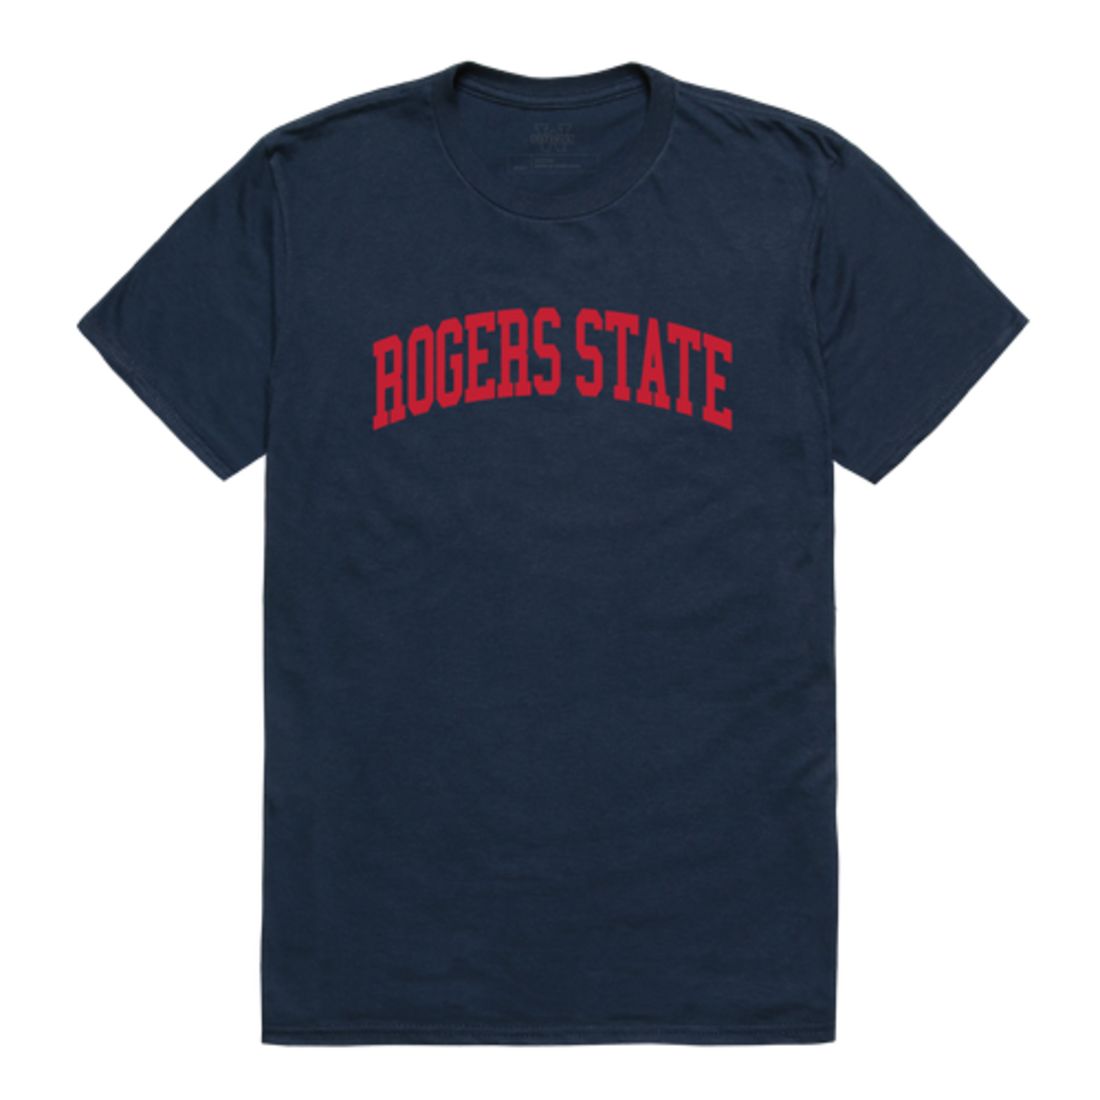 Rogers State University Hillcats Collegiate T-Shirt Tee